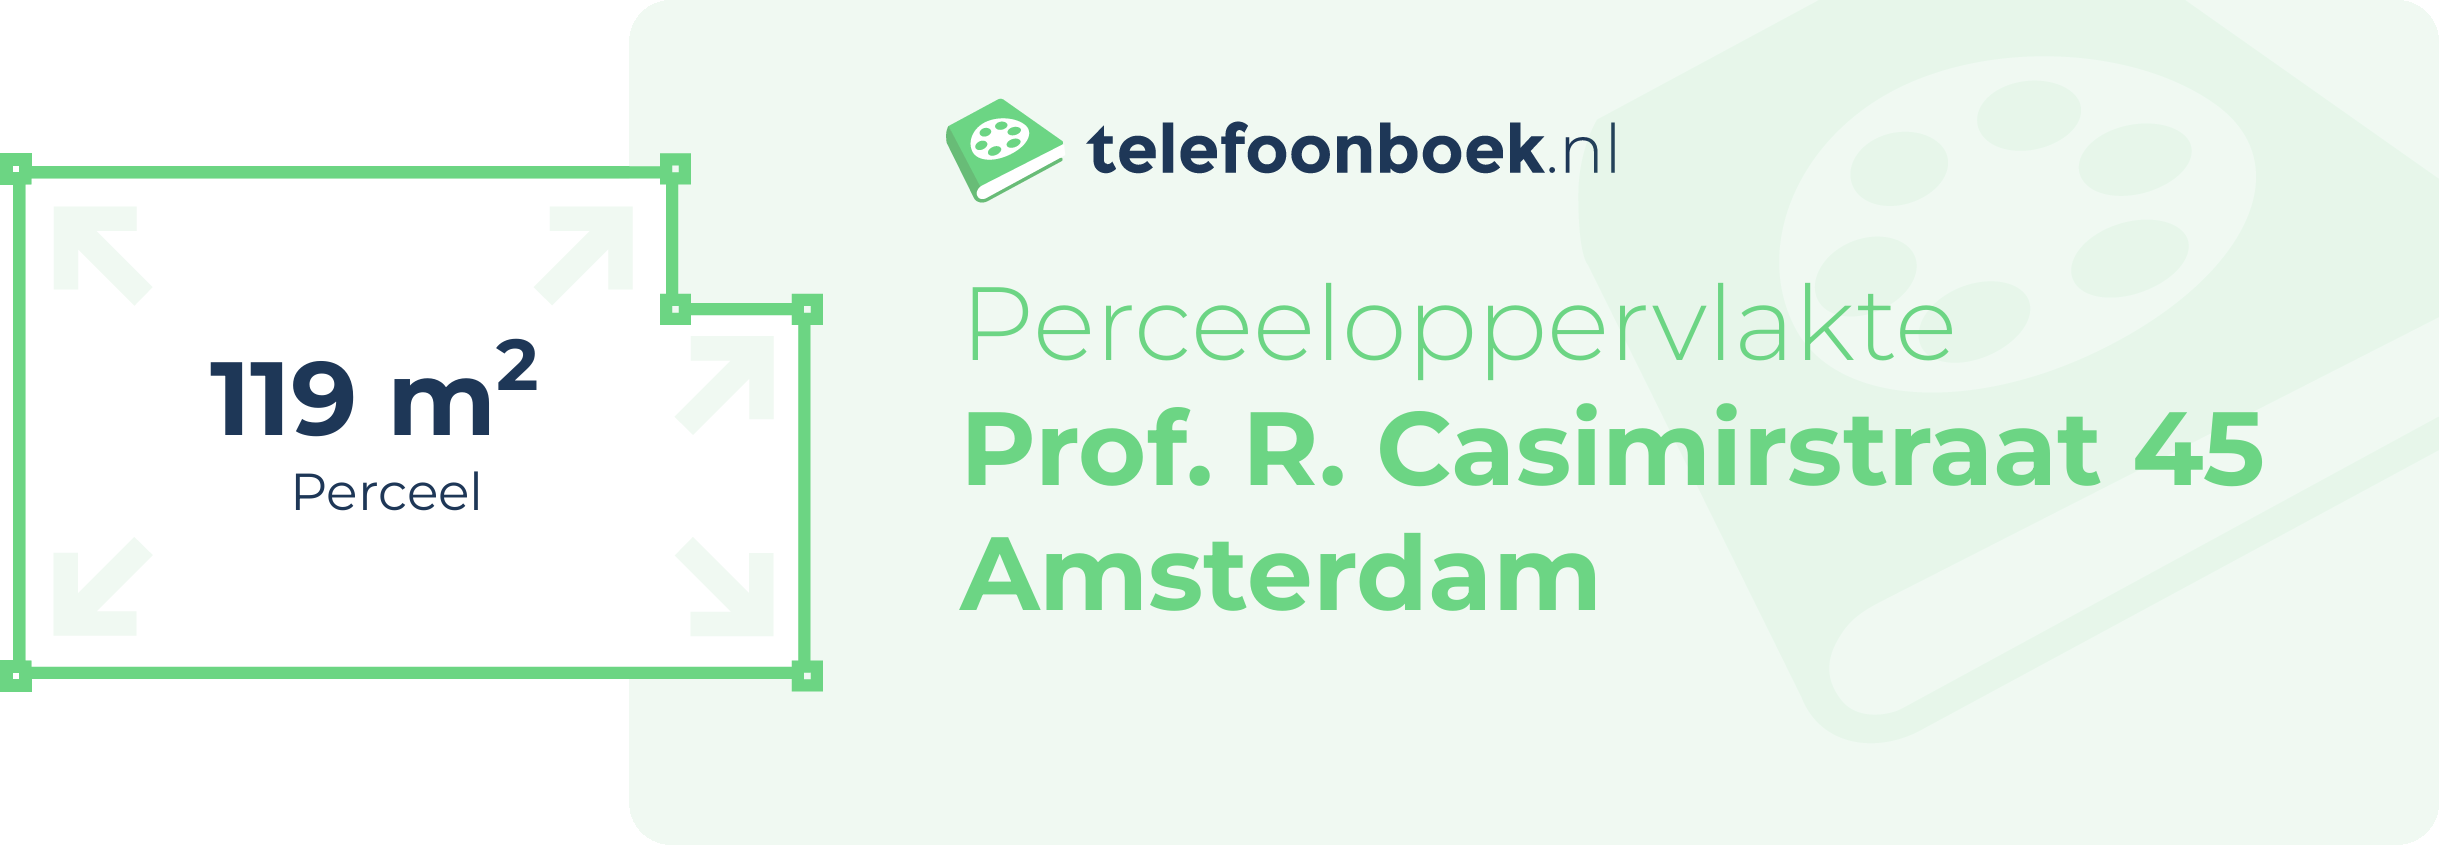 Perceeloppervlakte Prof. R. Casimirstraat 45 Amsterdam